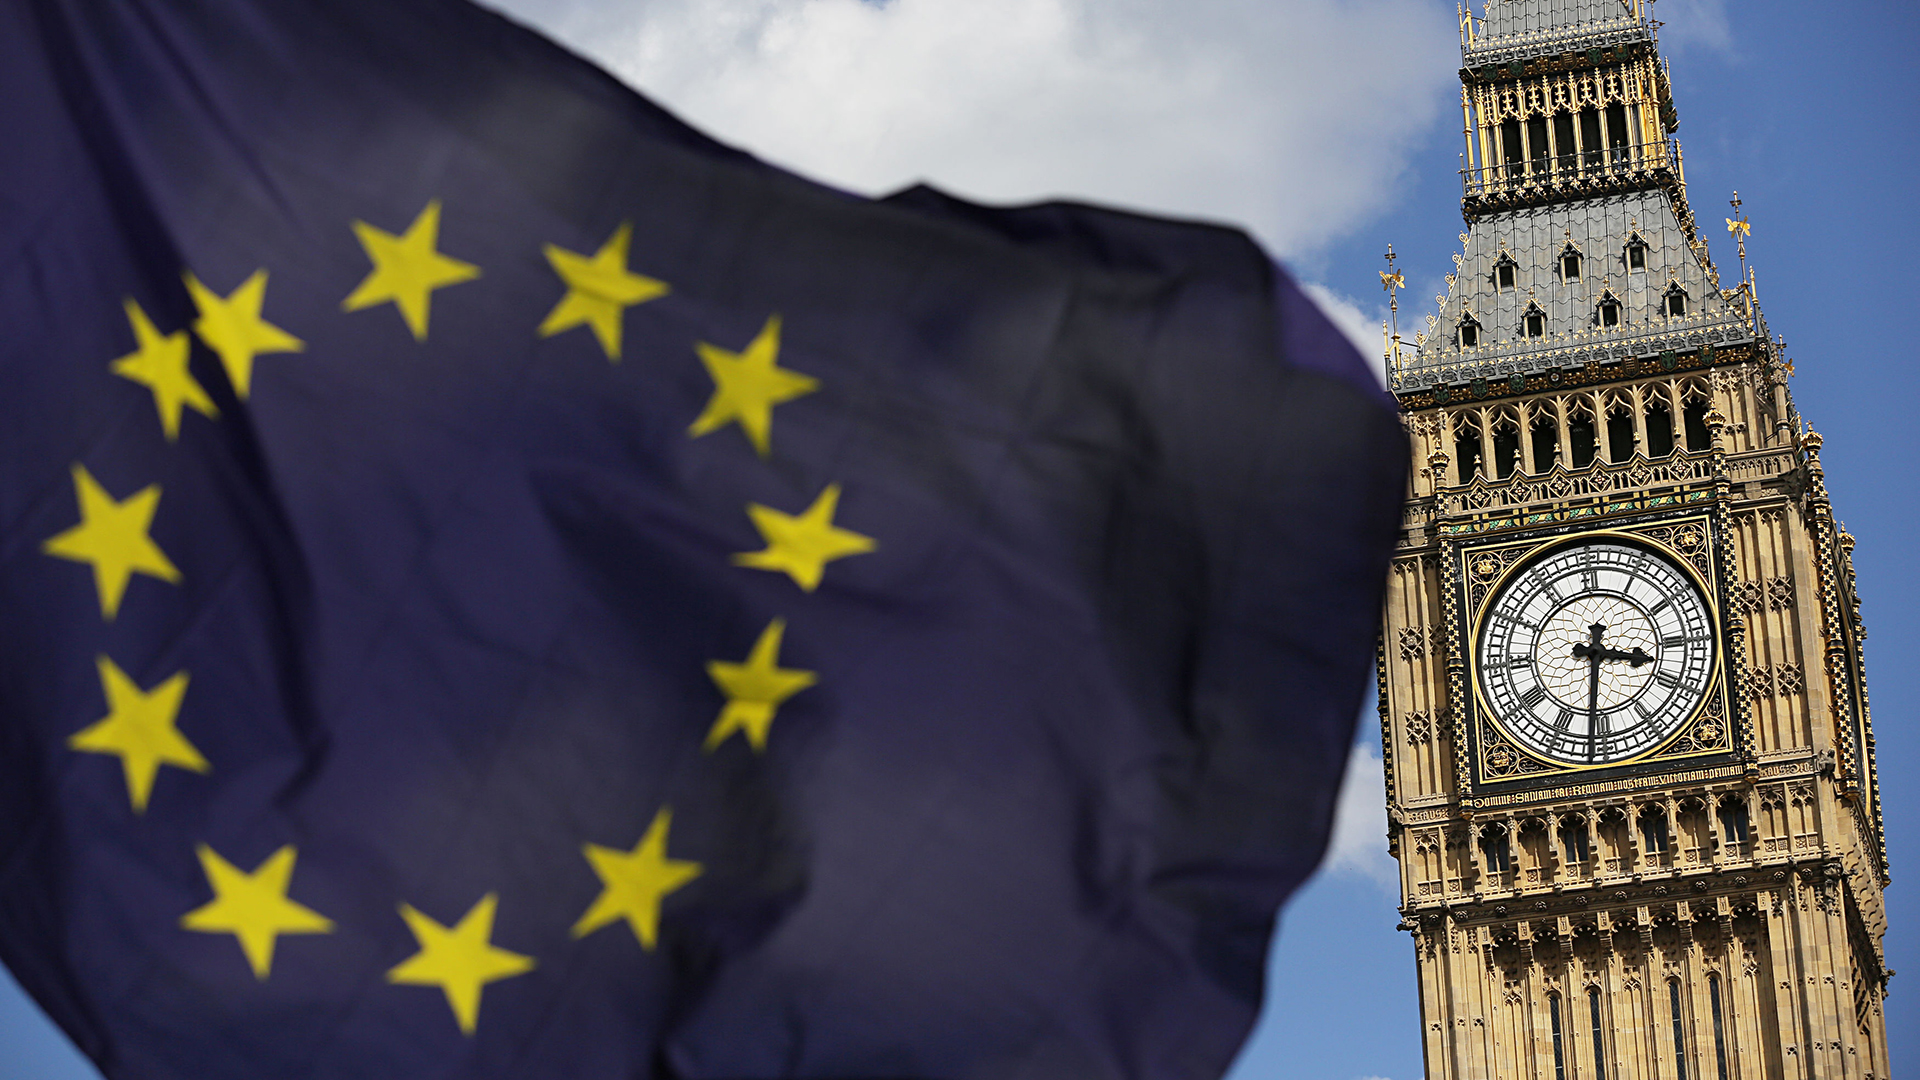 EU-Flagge weht vor dem Big Ben in London| Bildquelle: dpa